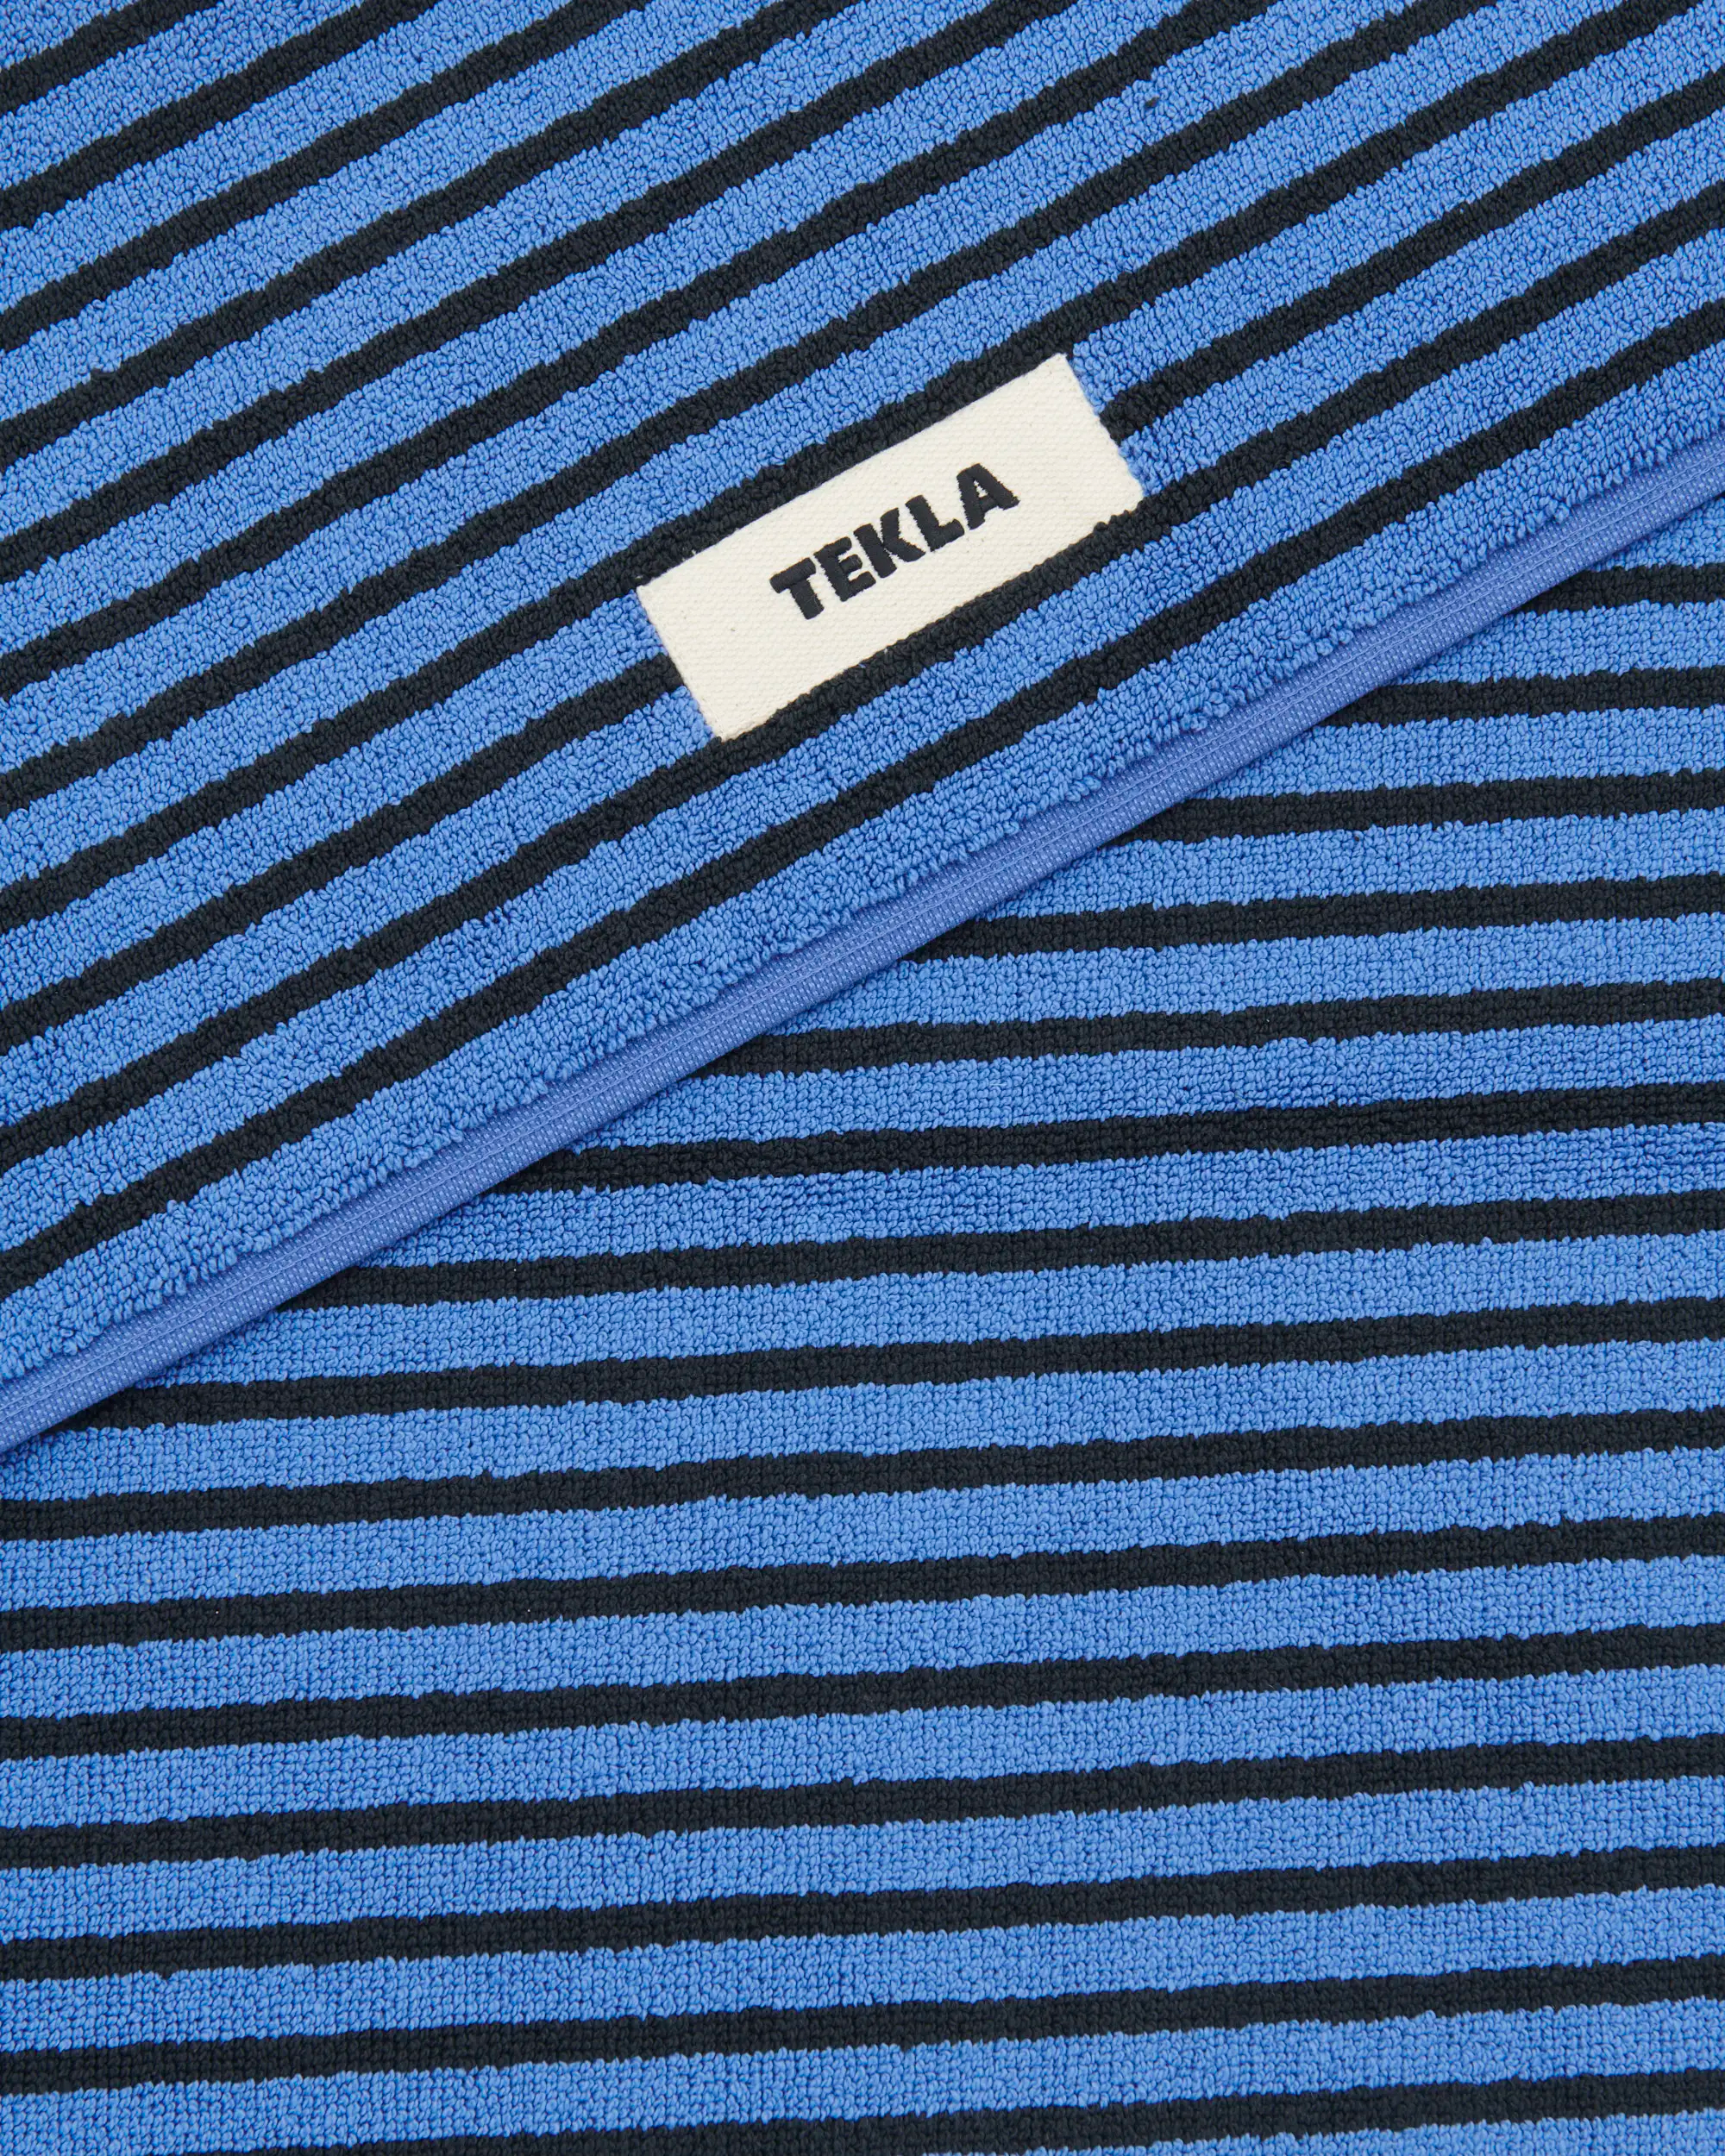 Bathmat (Sailor Stripes) - Blue / Black